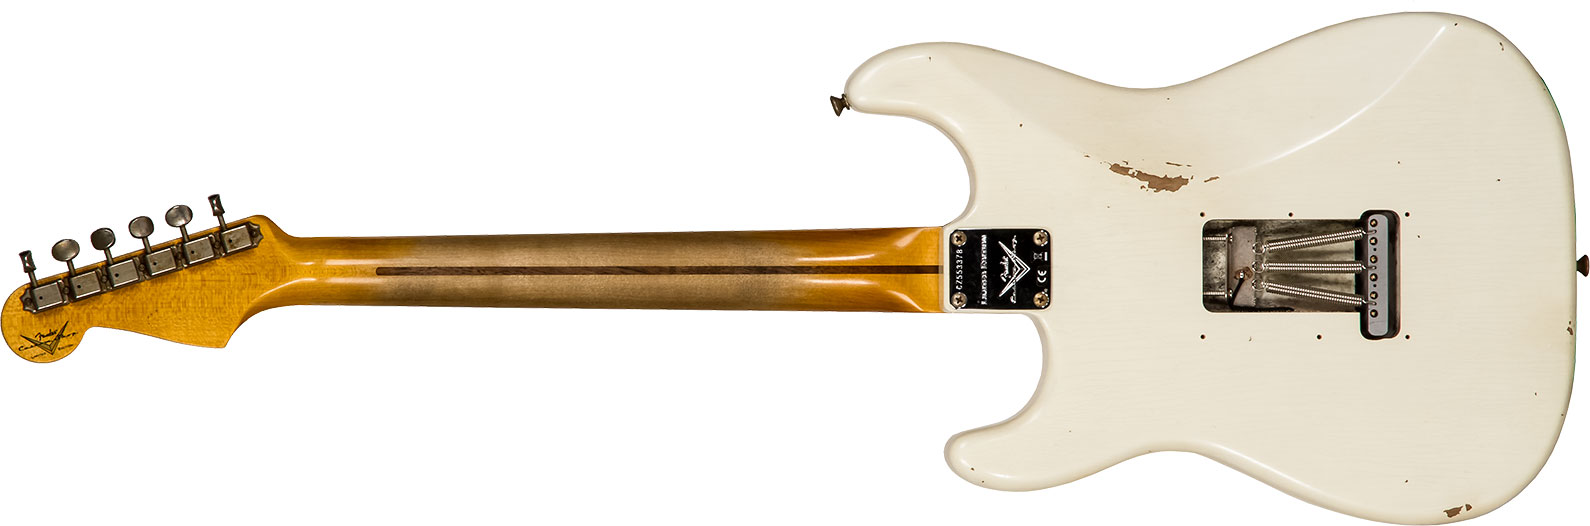 Fender Custom Shop Strat Poblano Ii 3s Trem Mn #cz555378 - Relic Olympic White - E-Gitarre in Str-Form - Variation 1